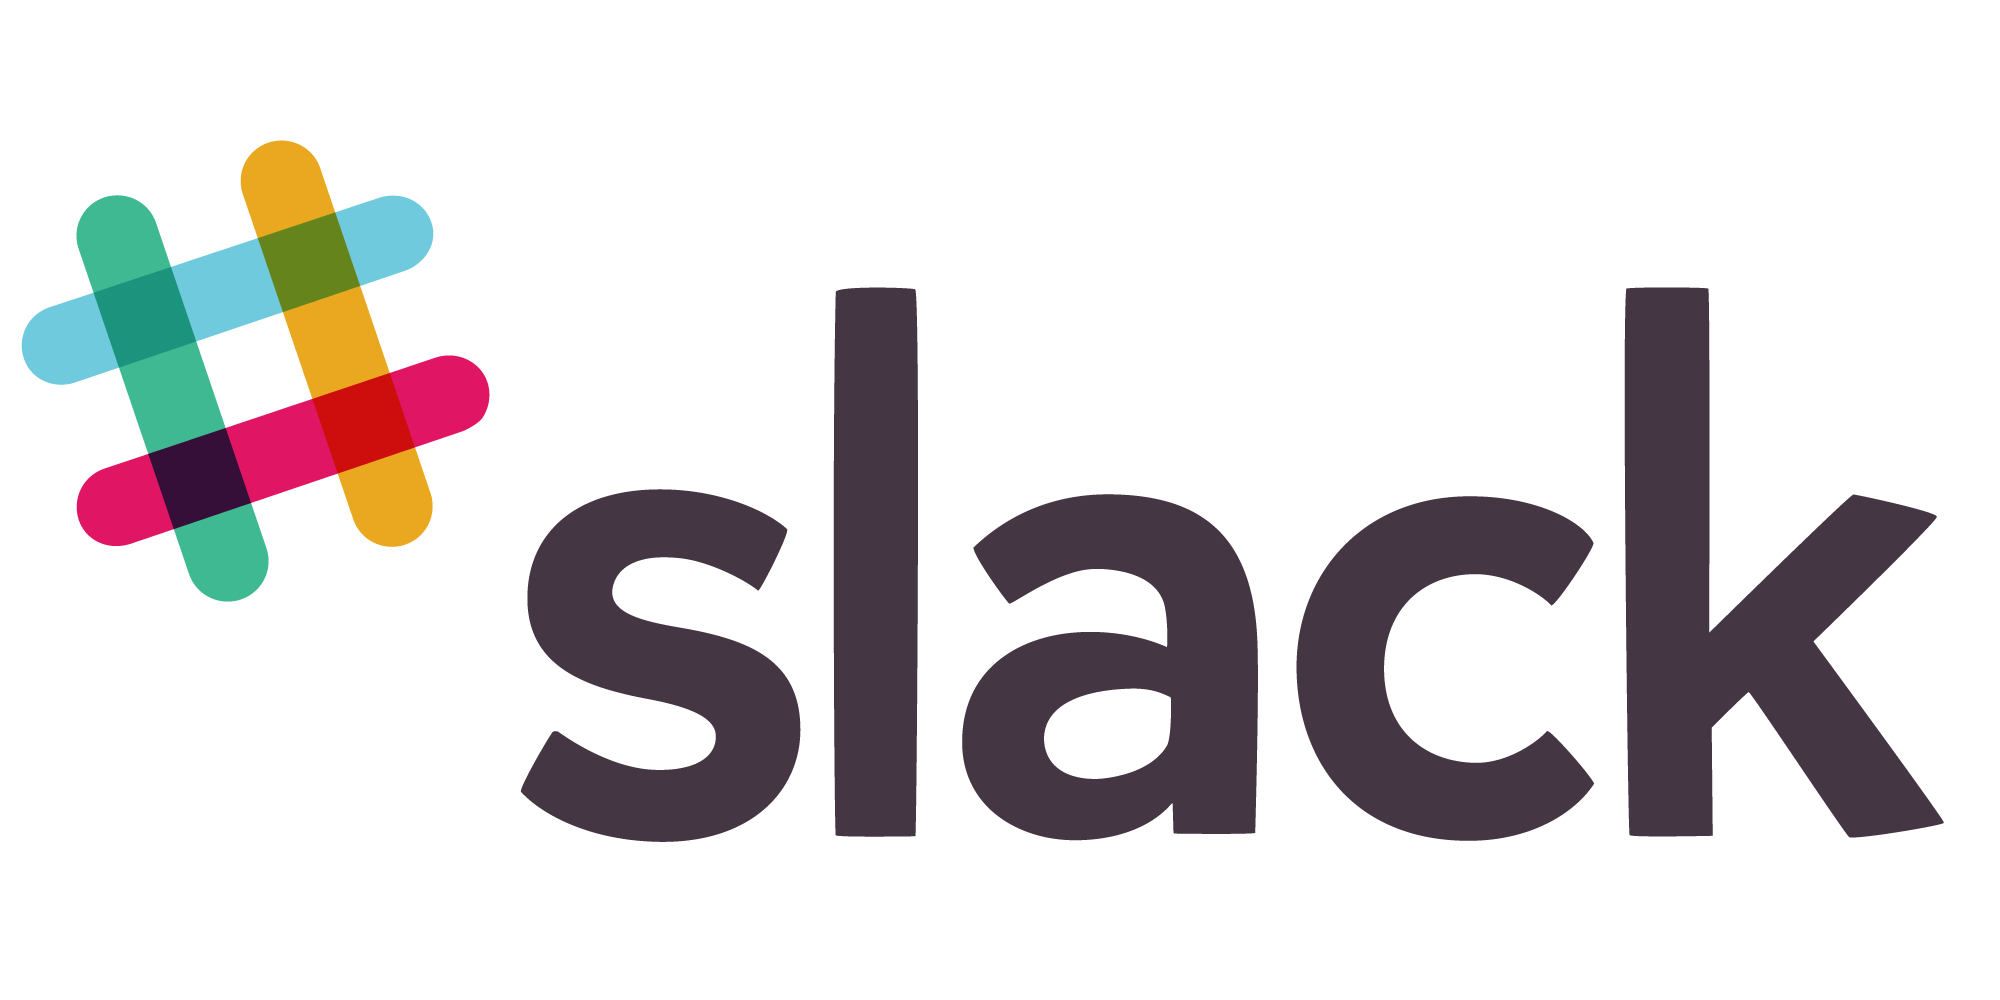 slack app